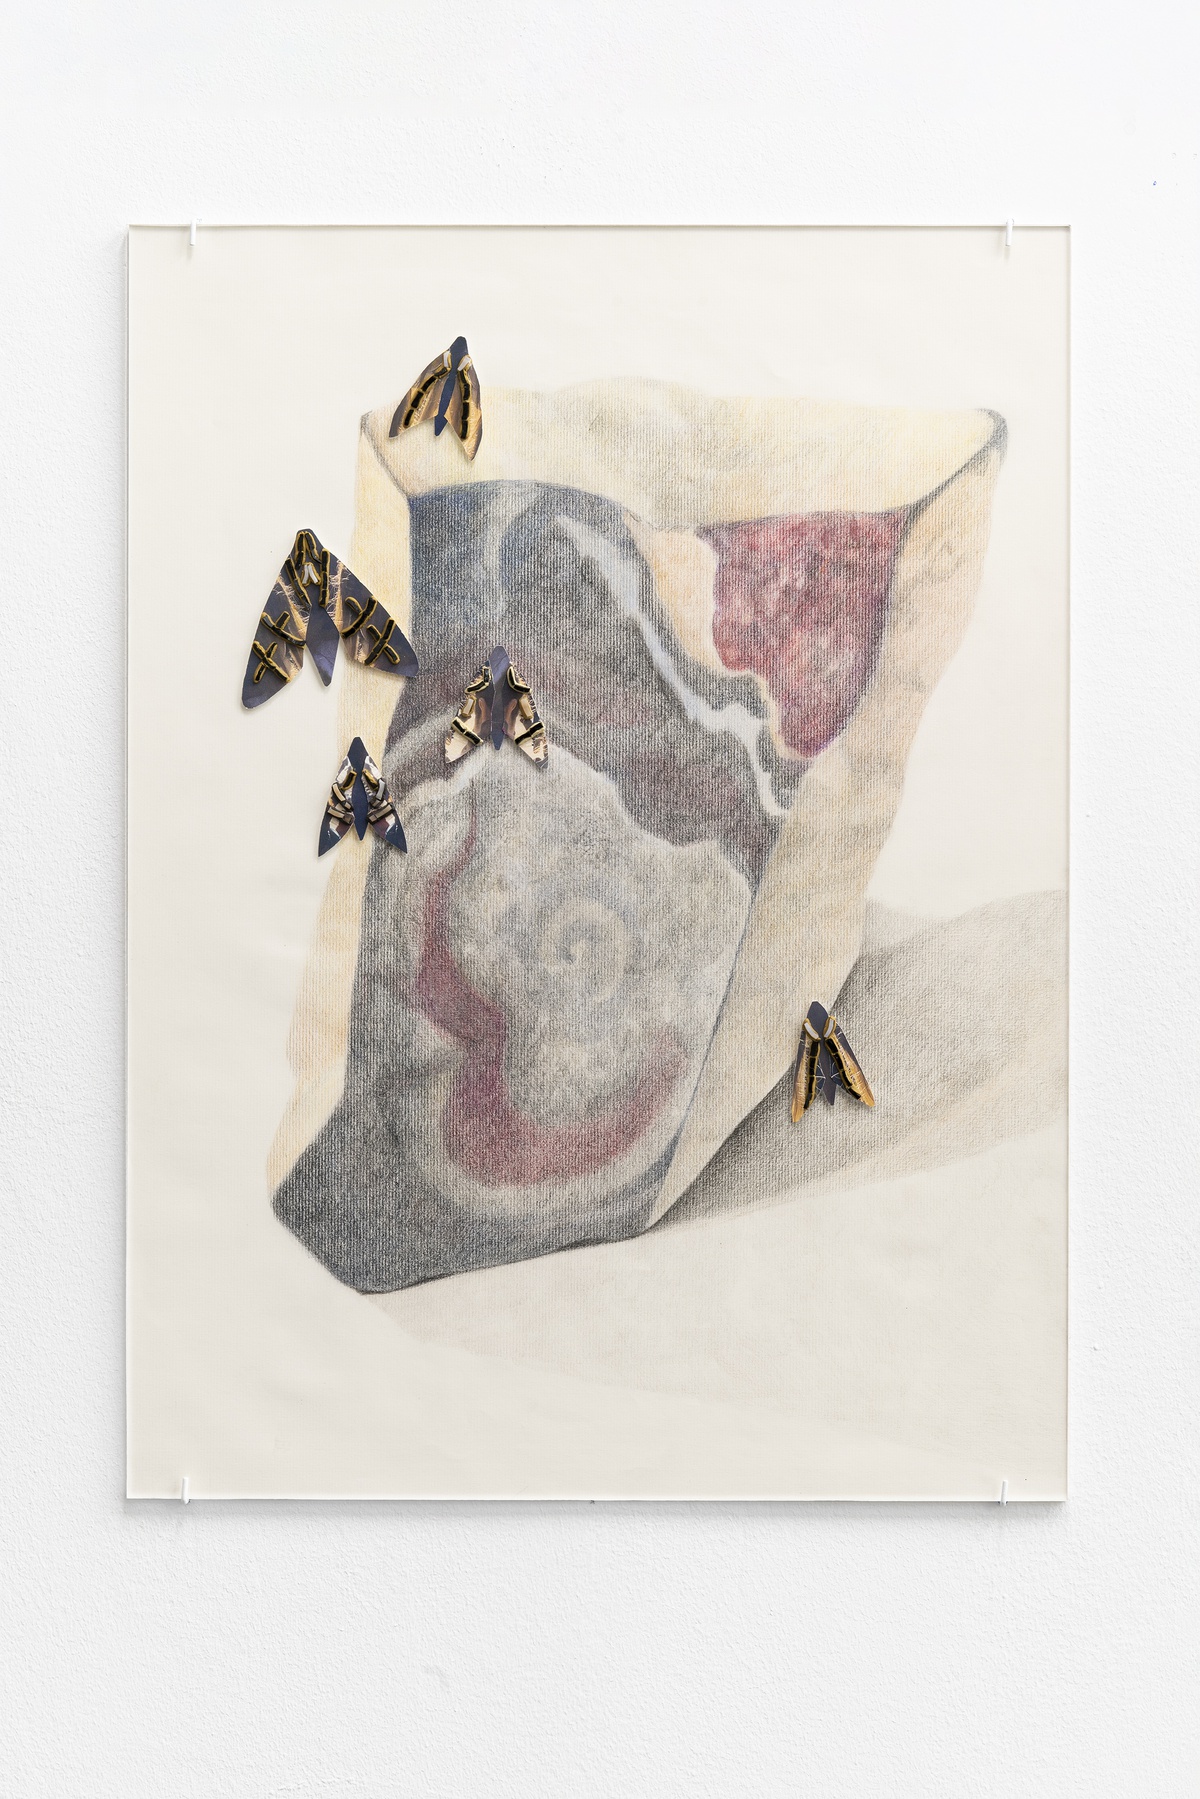 Susan Conte, Gate Icolored pencil, paper, glass, iPhone photos, clay resin, epoxy, plexiglass45,7 × 61 cm